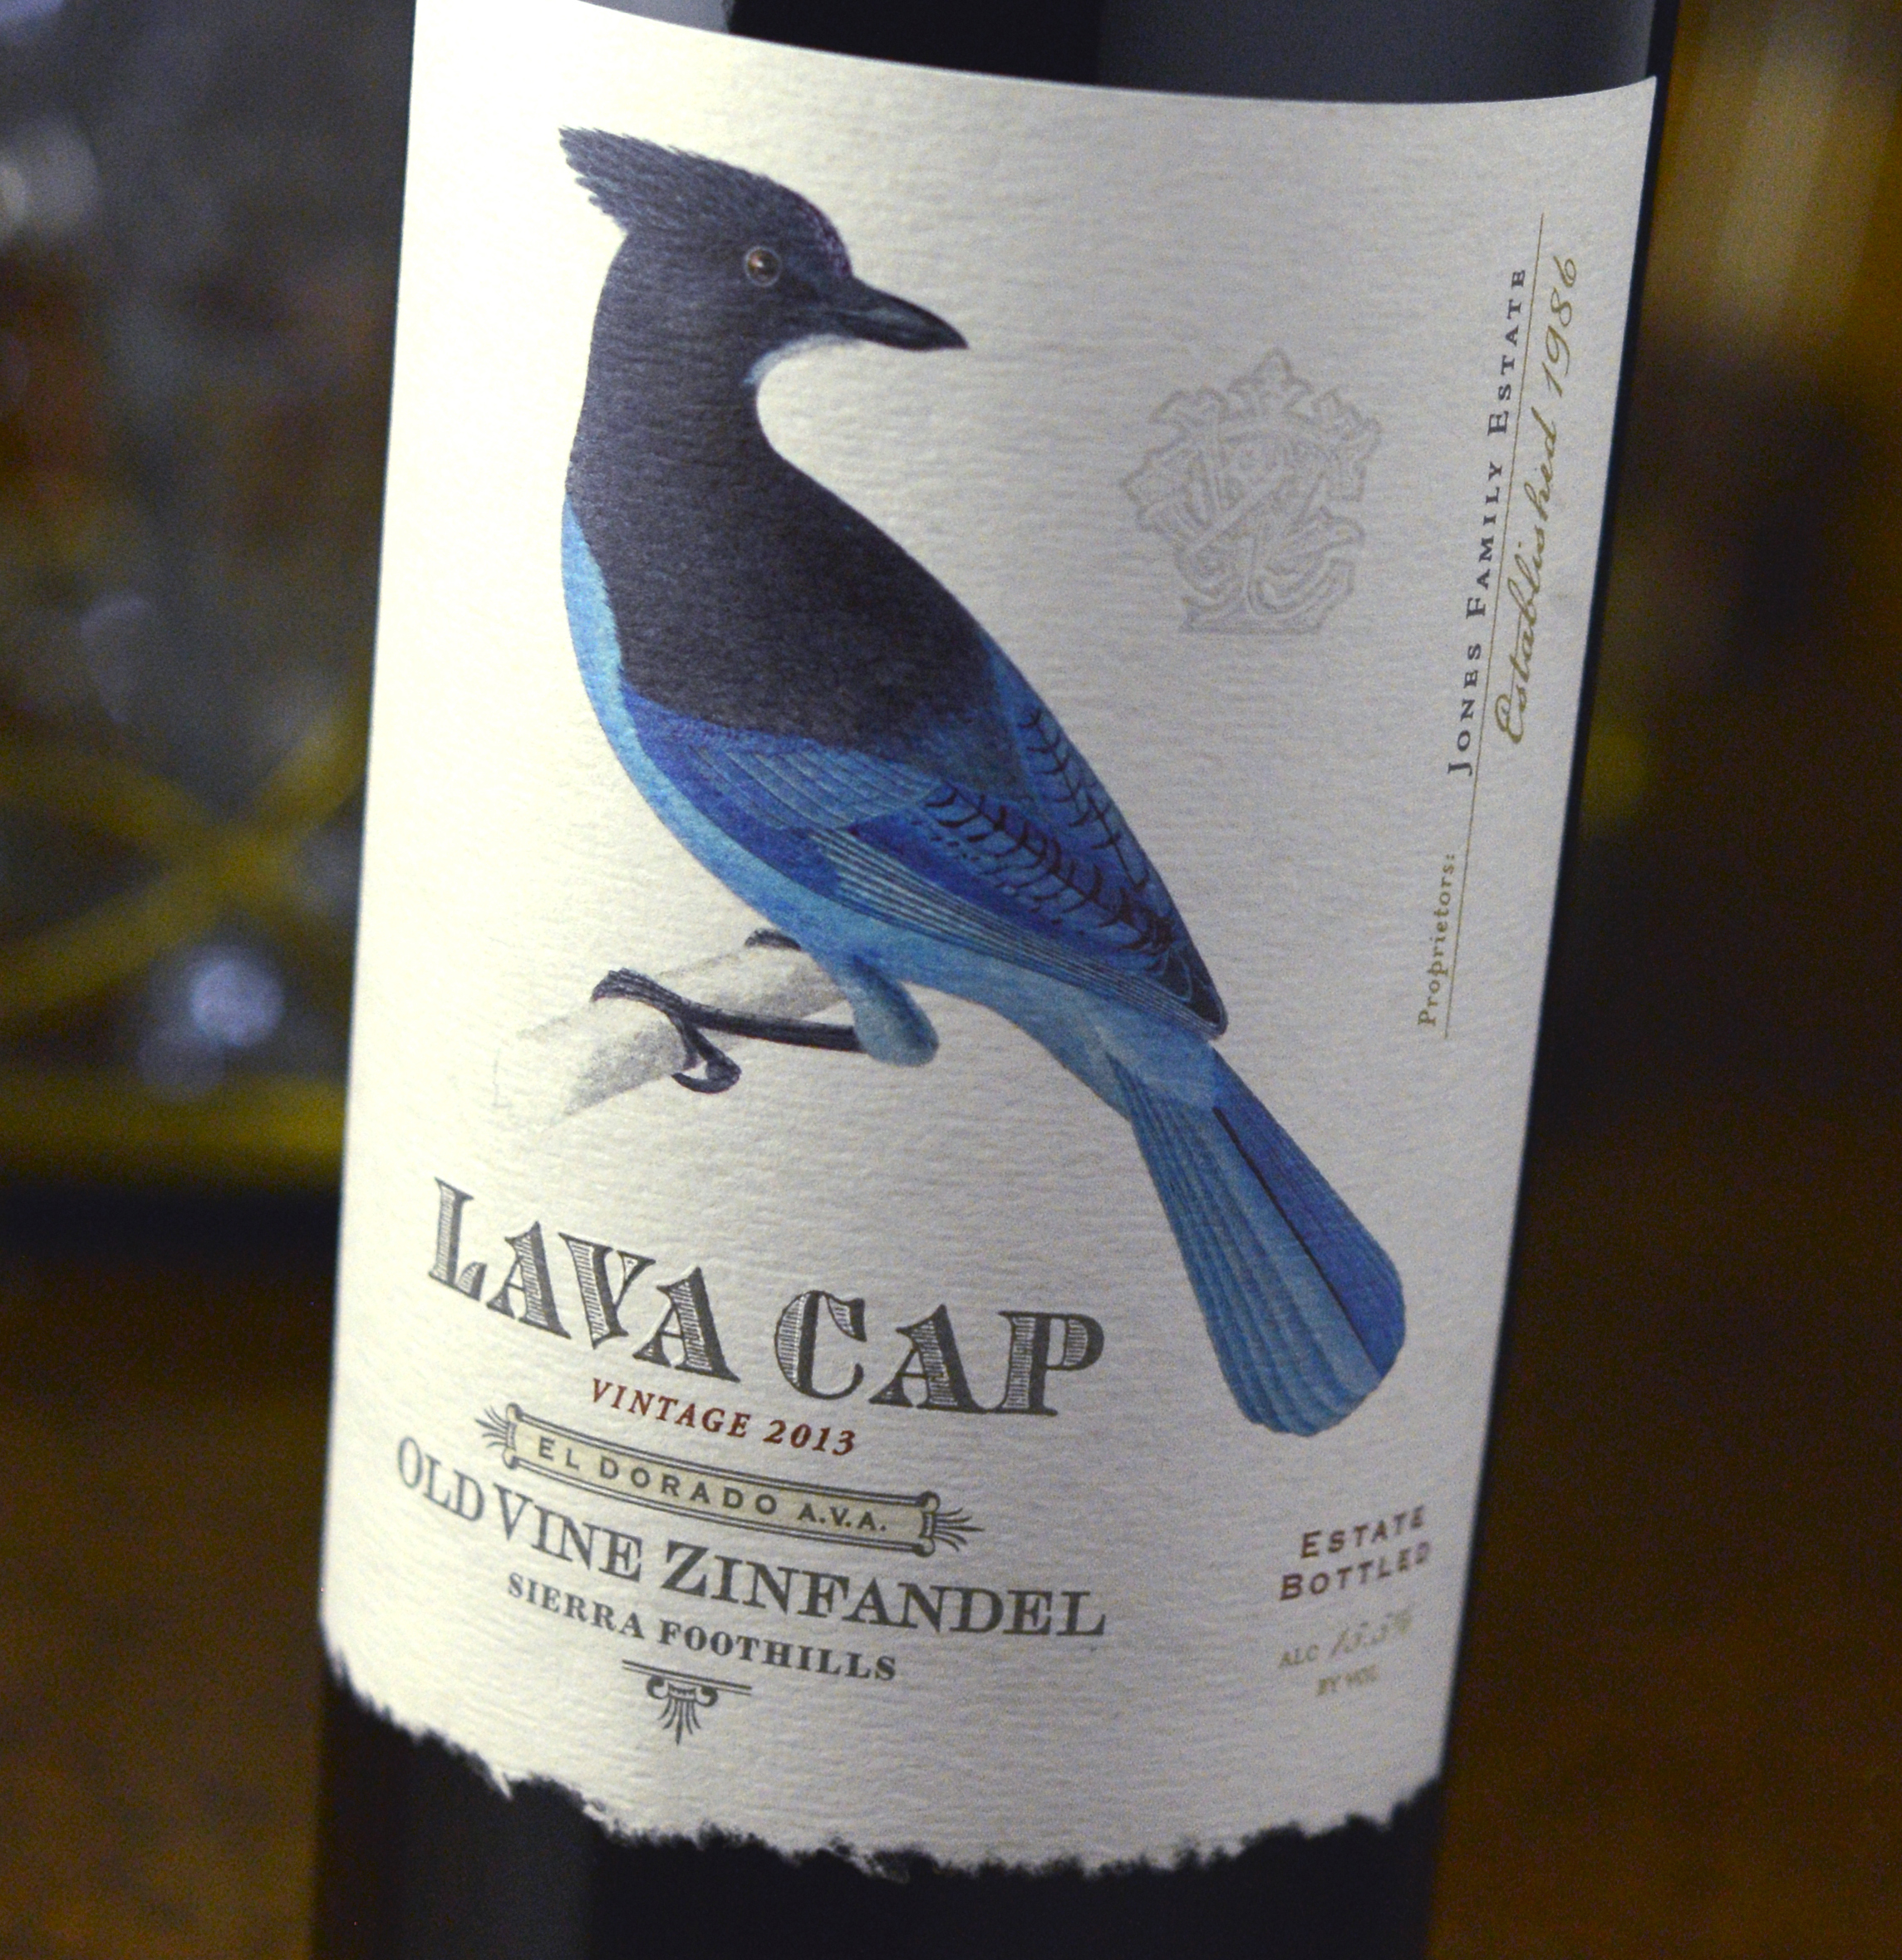 Auston Design Group – Lava Cap Winery